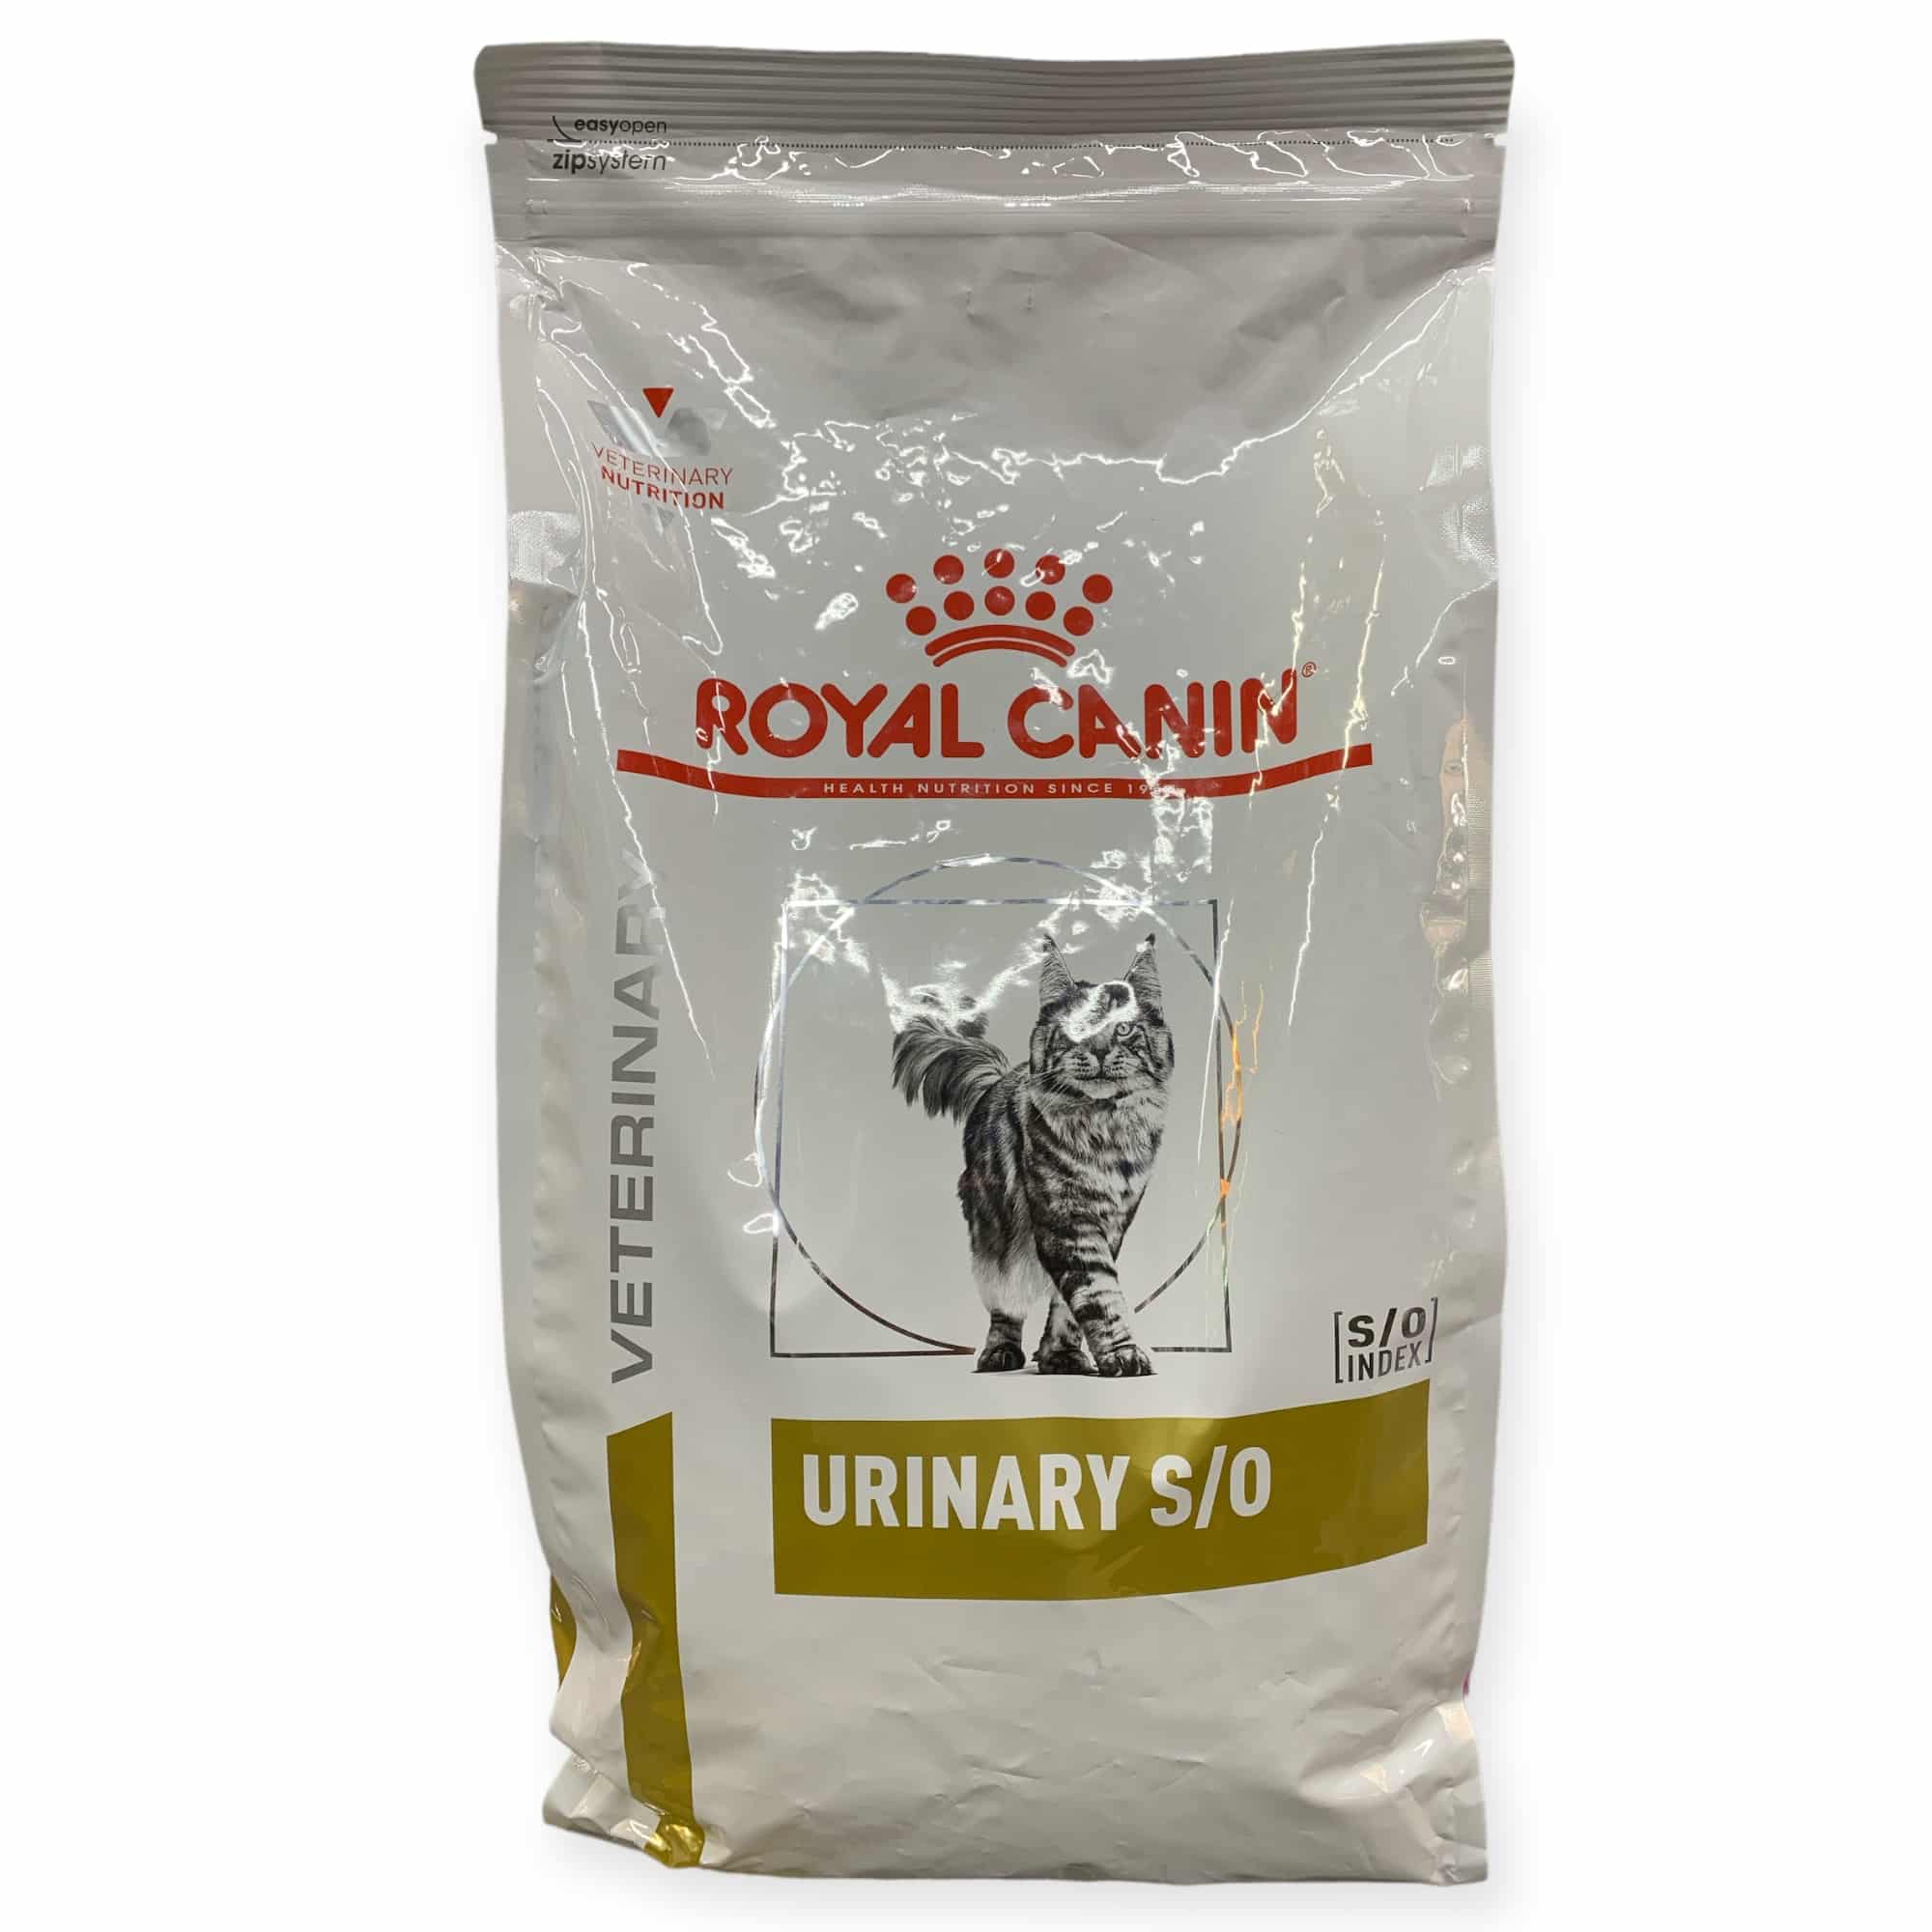 Urinary Royal Canin רויל קנין לחתול יורינרי ,3.5 קילו לחתולים